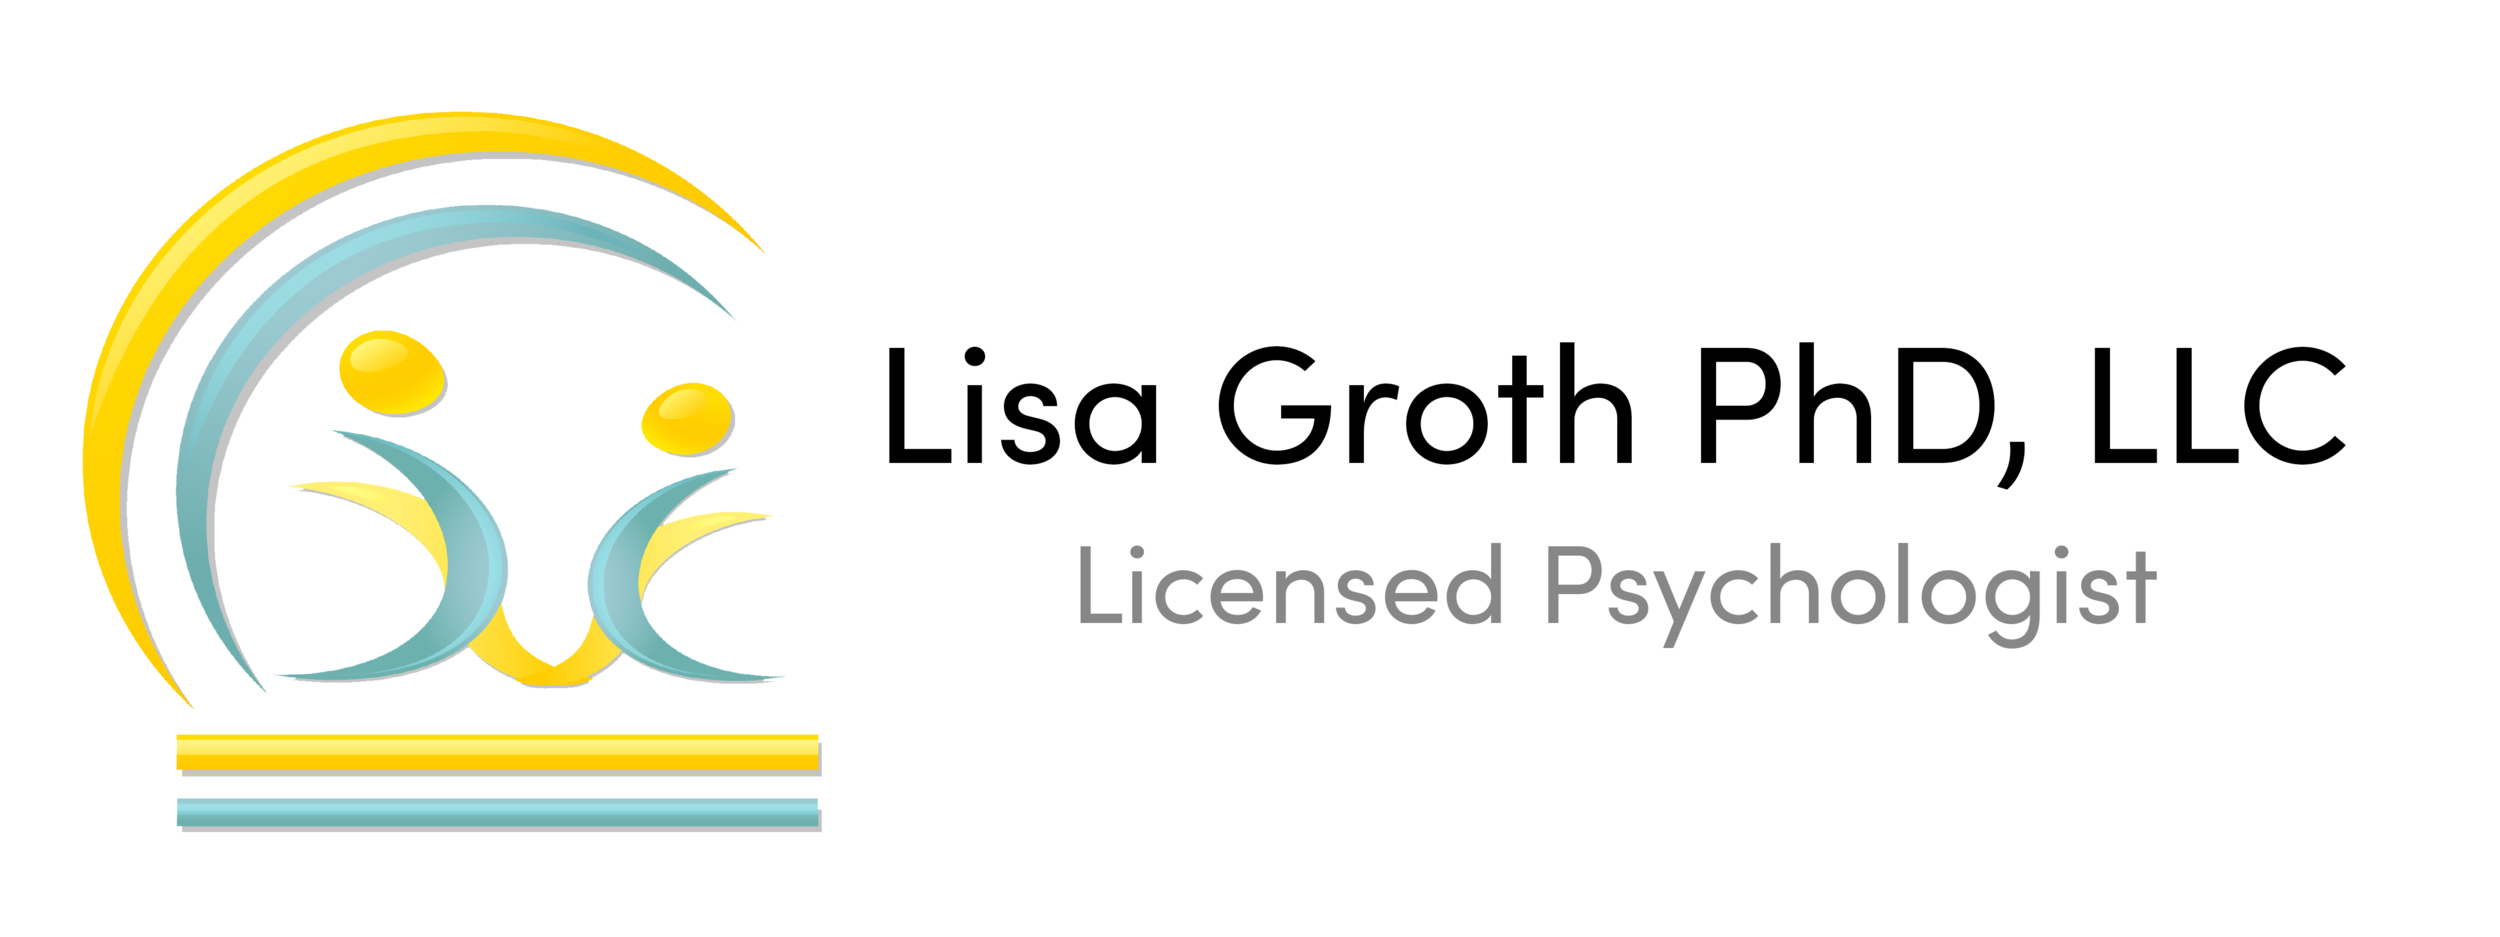 Lisa Groth, PhD, LLC